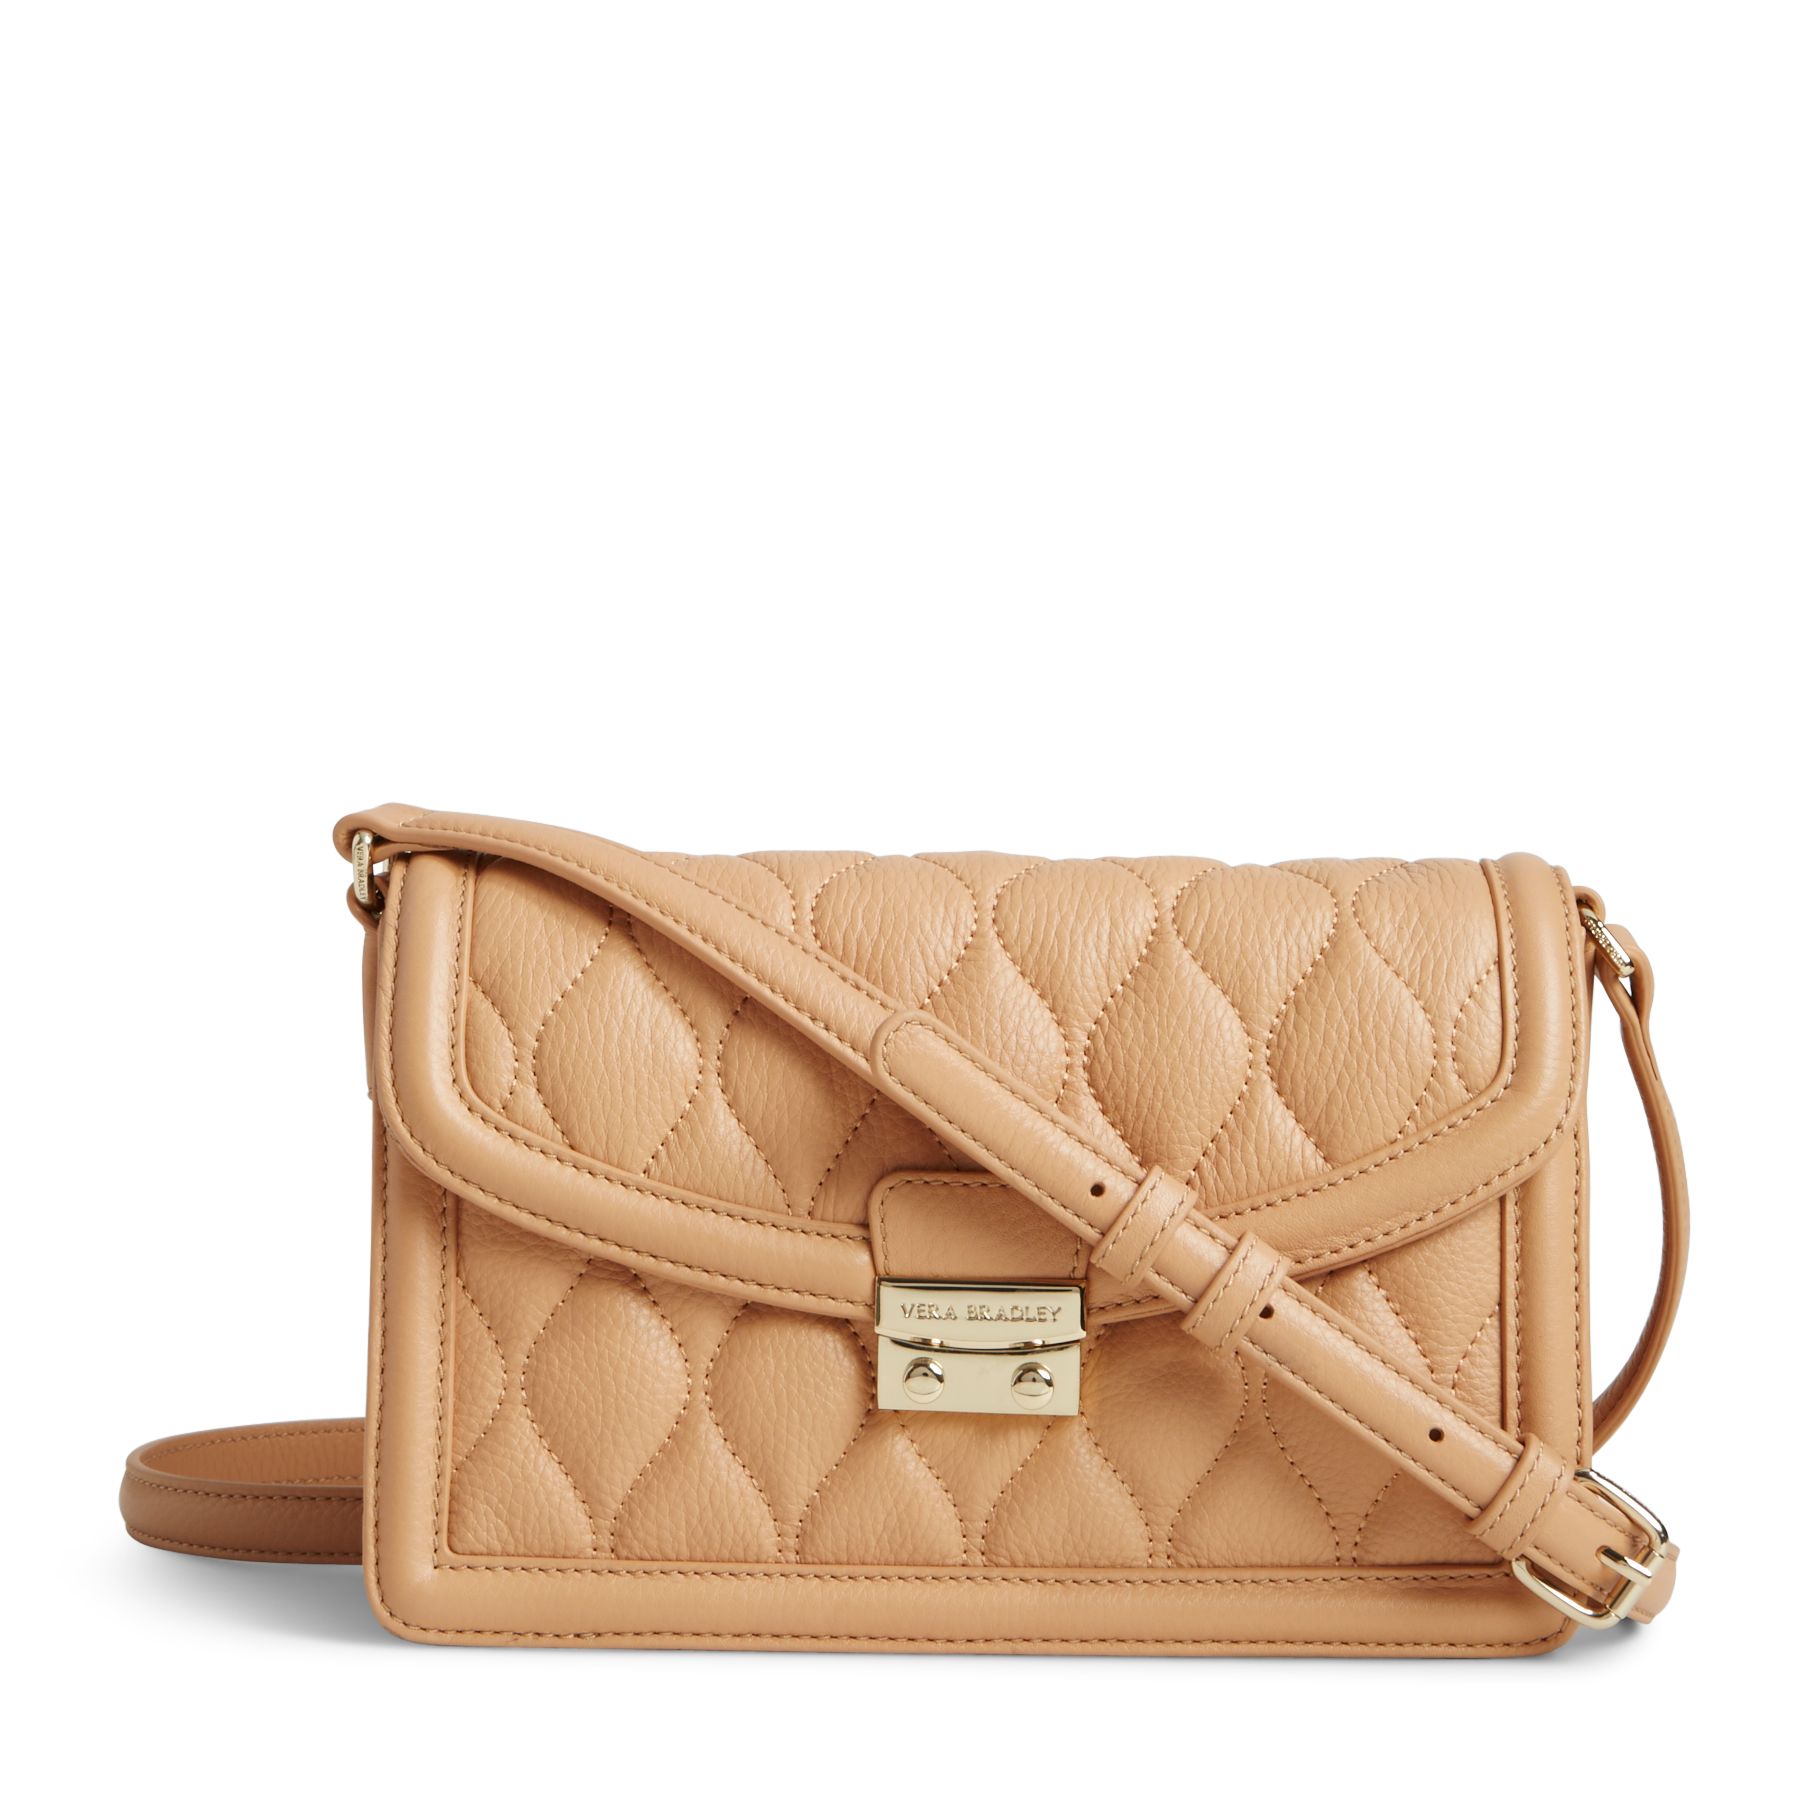 Vera Bradley Quilted Leather Tess Crossbody Bag | eBay